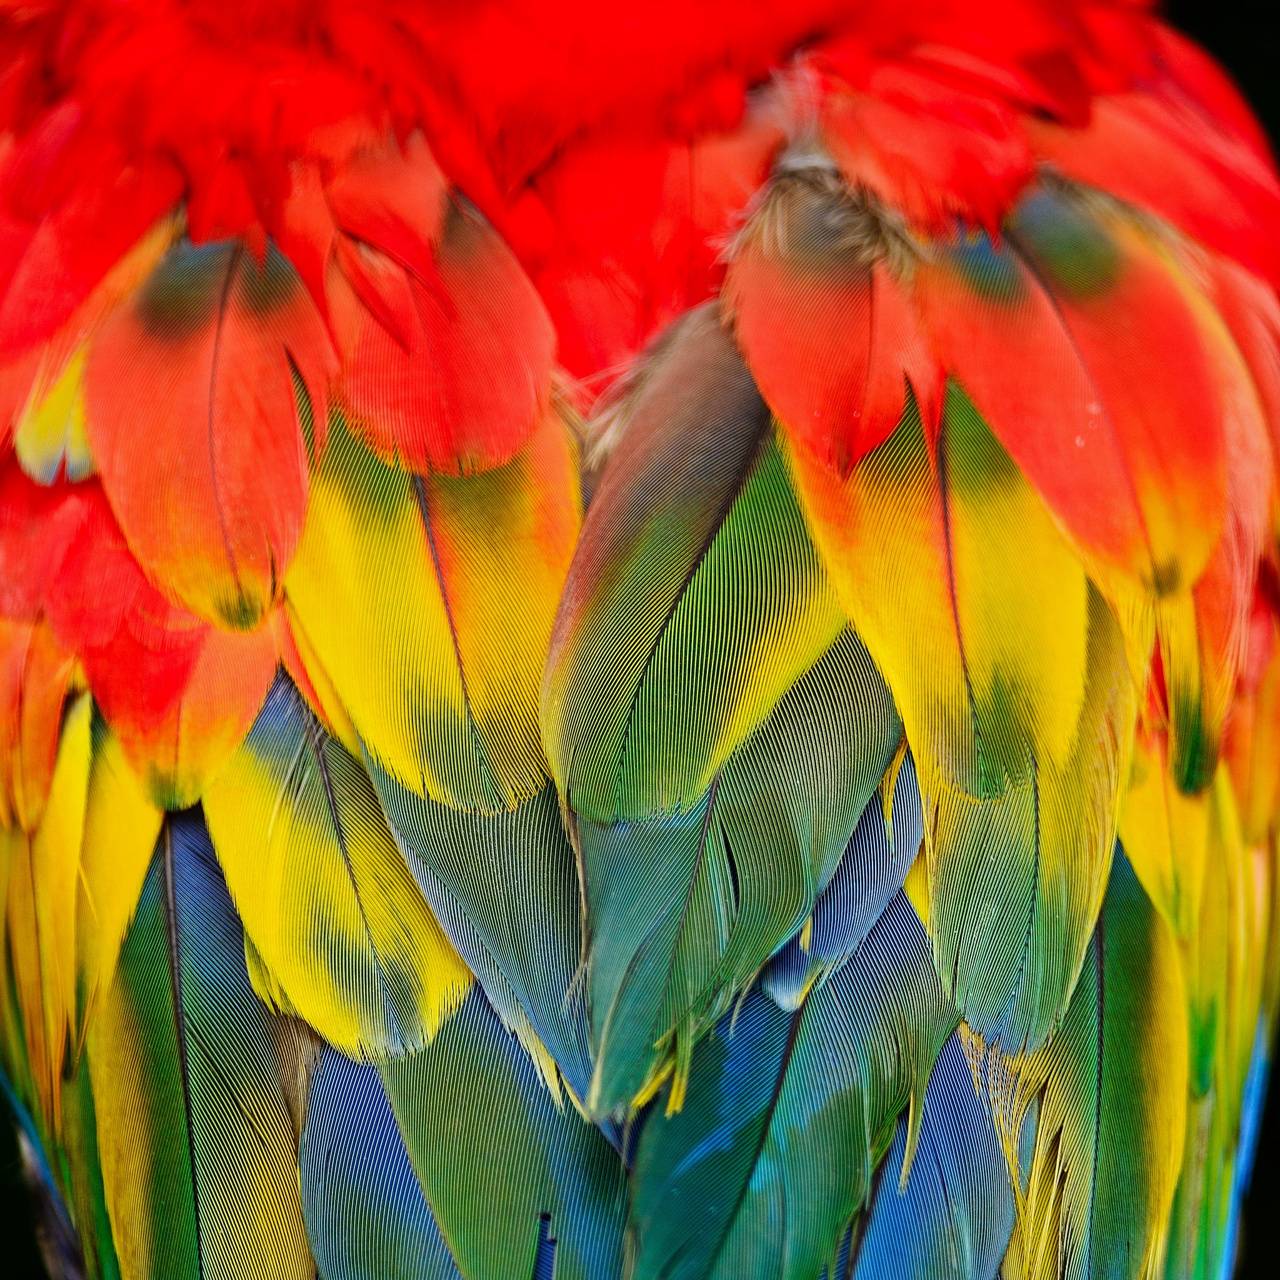 عکس میکروسکوپی پر های رنگی طوطی ماکائو با وضوح عالی 1401